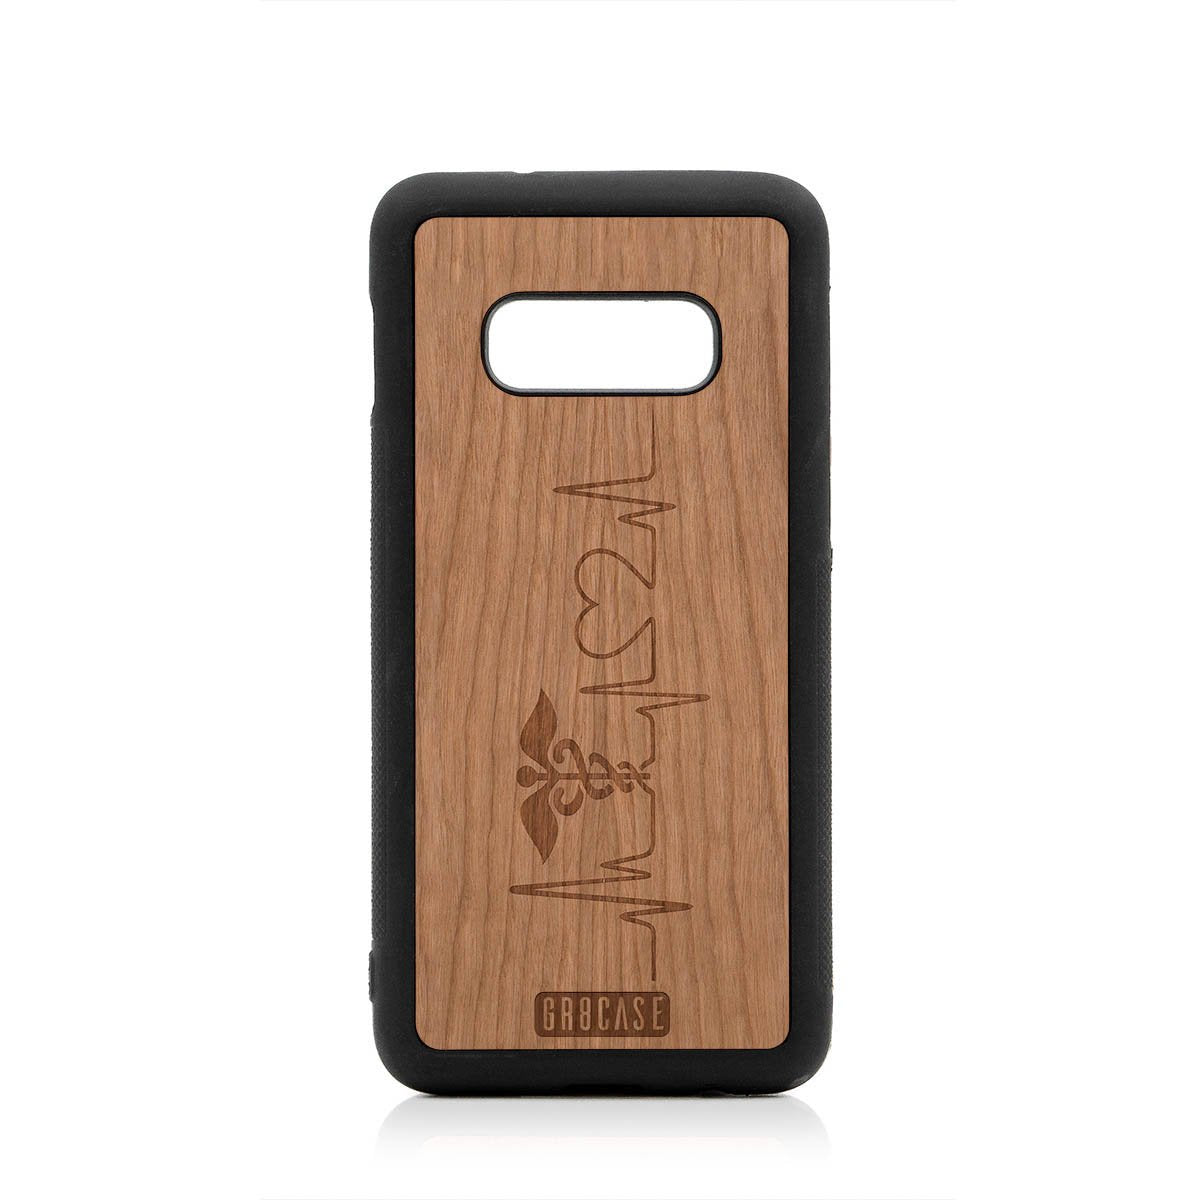 Hero's Heart (Nurse, Doctor) Design Wood Case Samsung Galaxy S10E by GR8CASE